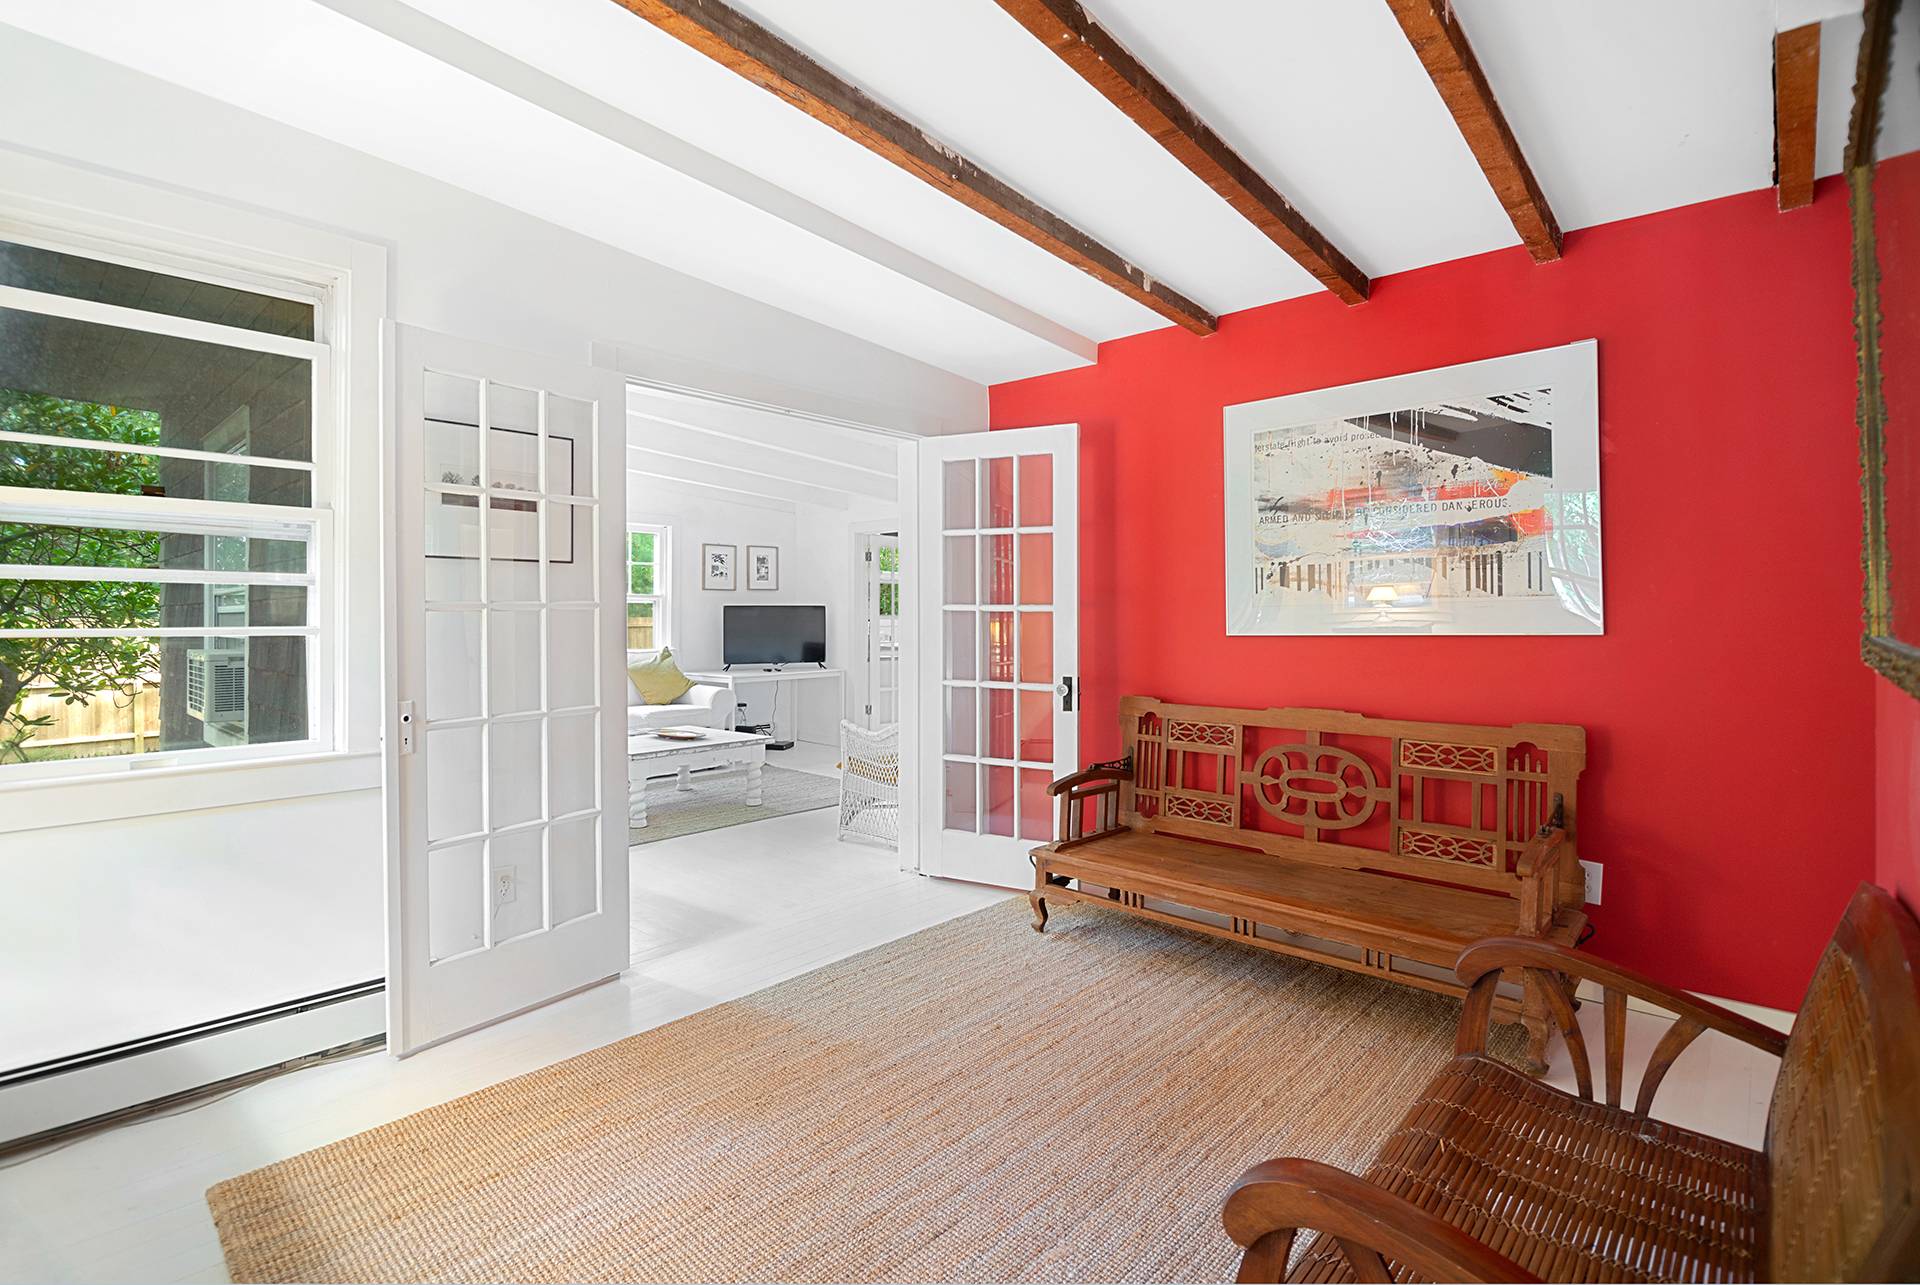 Rental Property at East Hampton, East Hampton, Hamptons, NY - Bedrooms: 4 
Bathrooms: 2  - $25,000 MO.